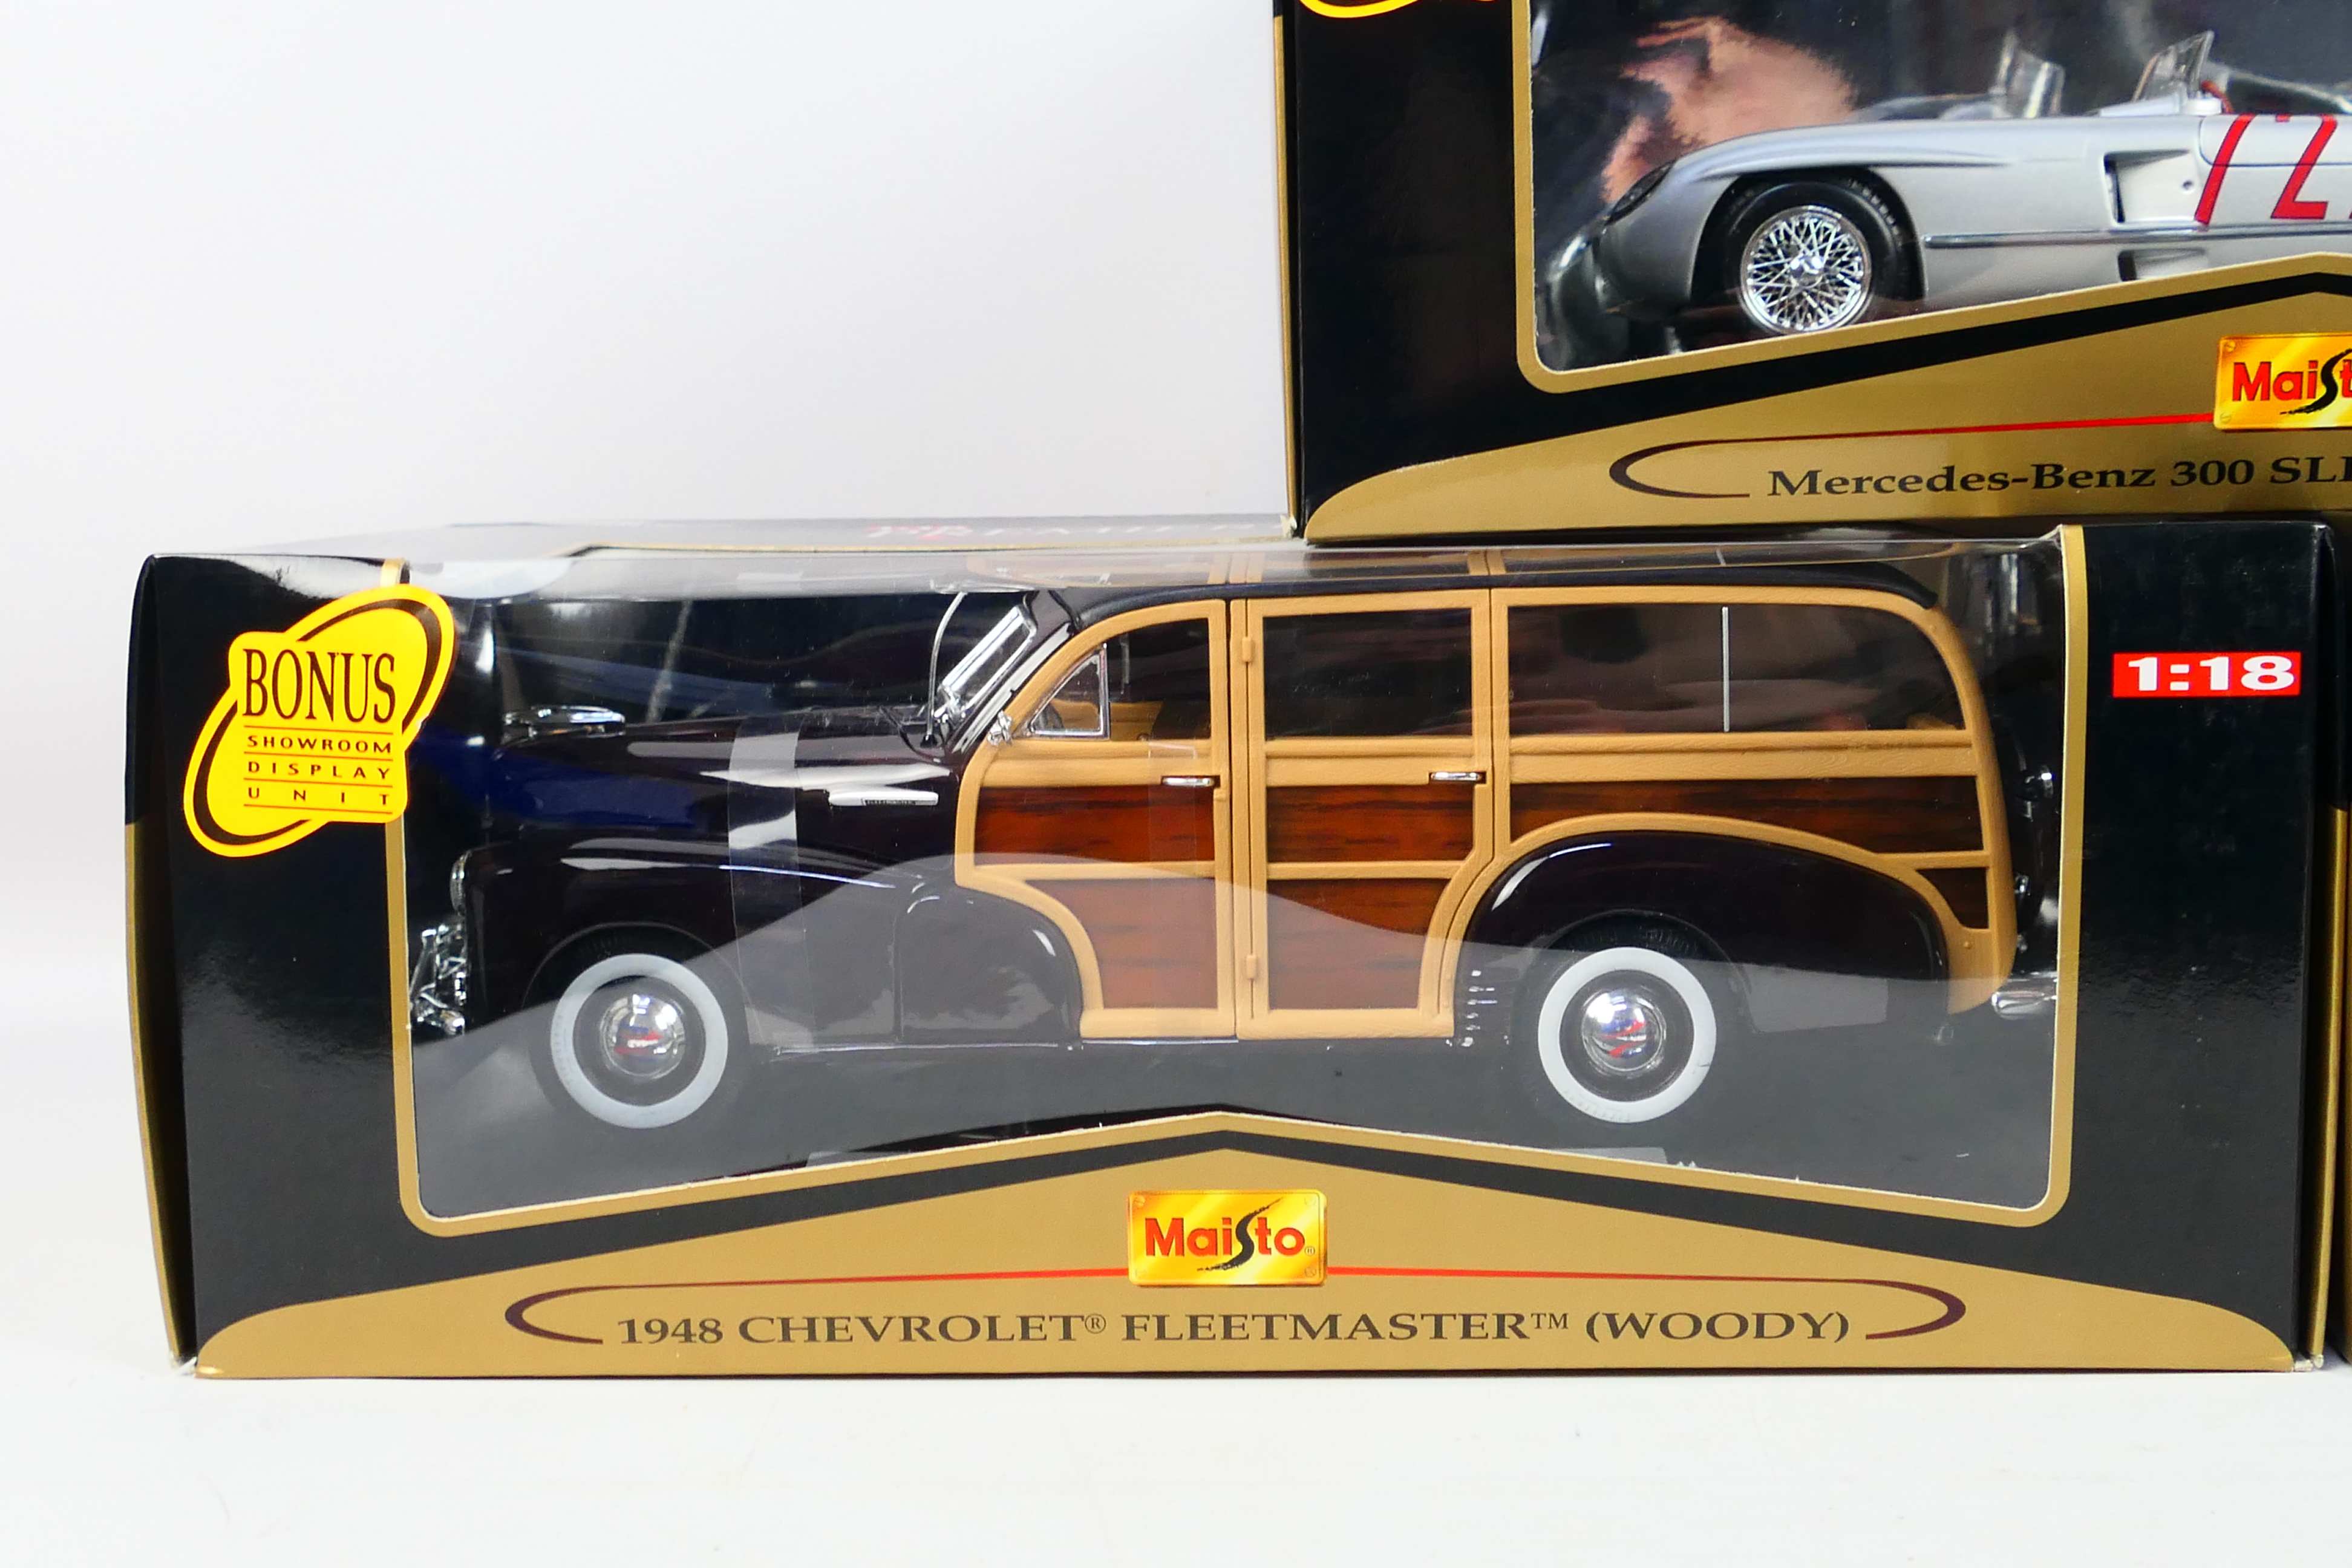 Maisto - Three boxed Maisto 'Premiere Edition' 1:18 scale diecast model cars. - Image 3 of 4